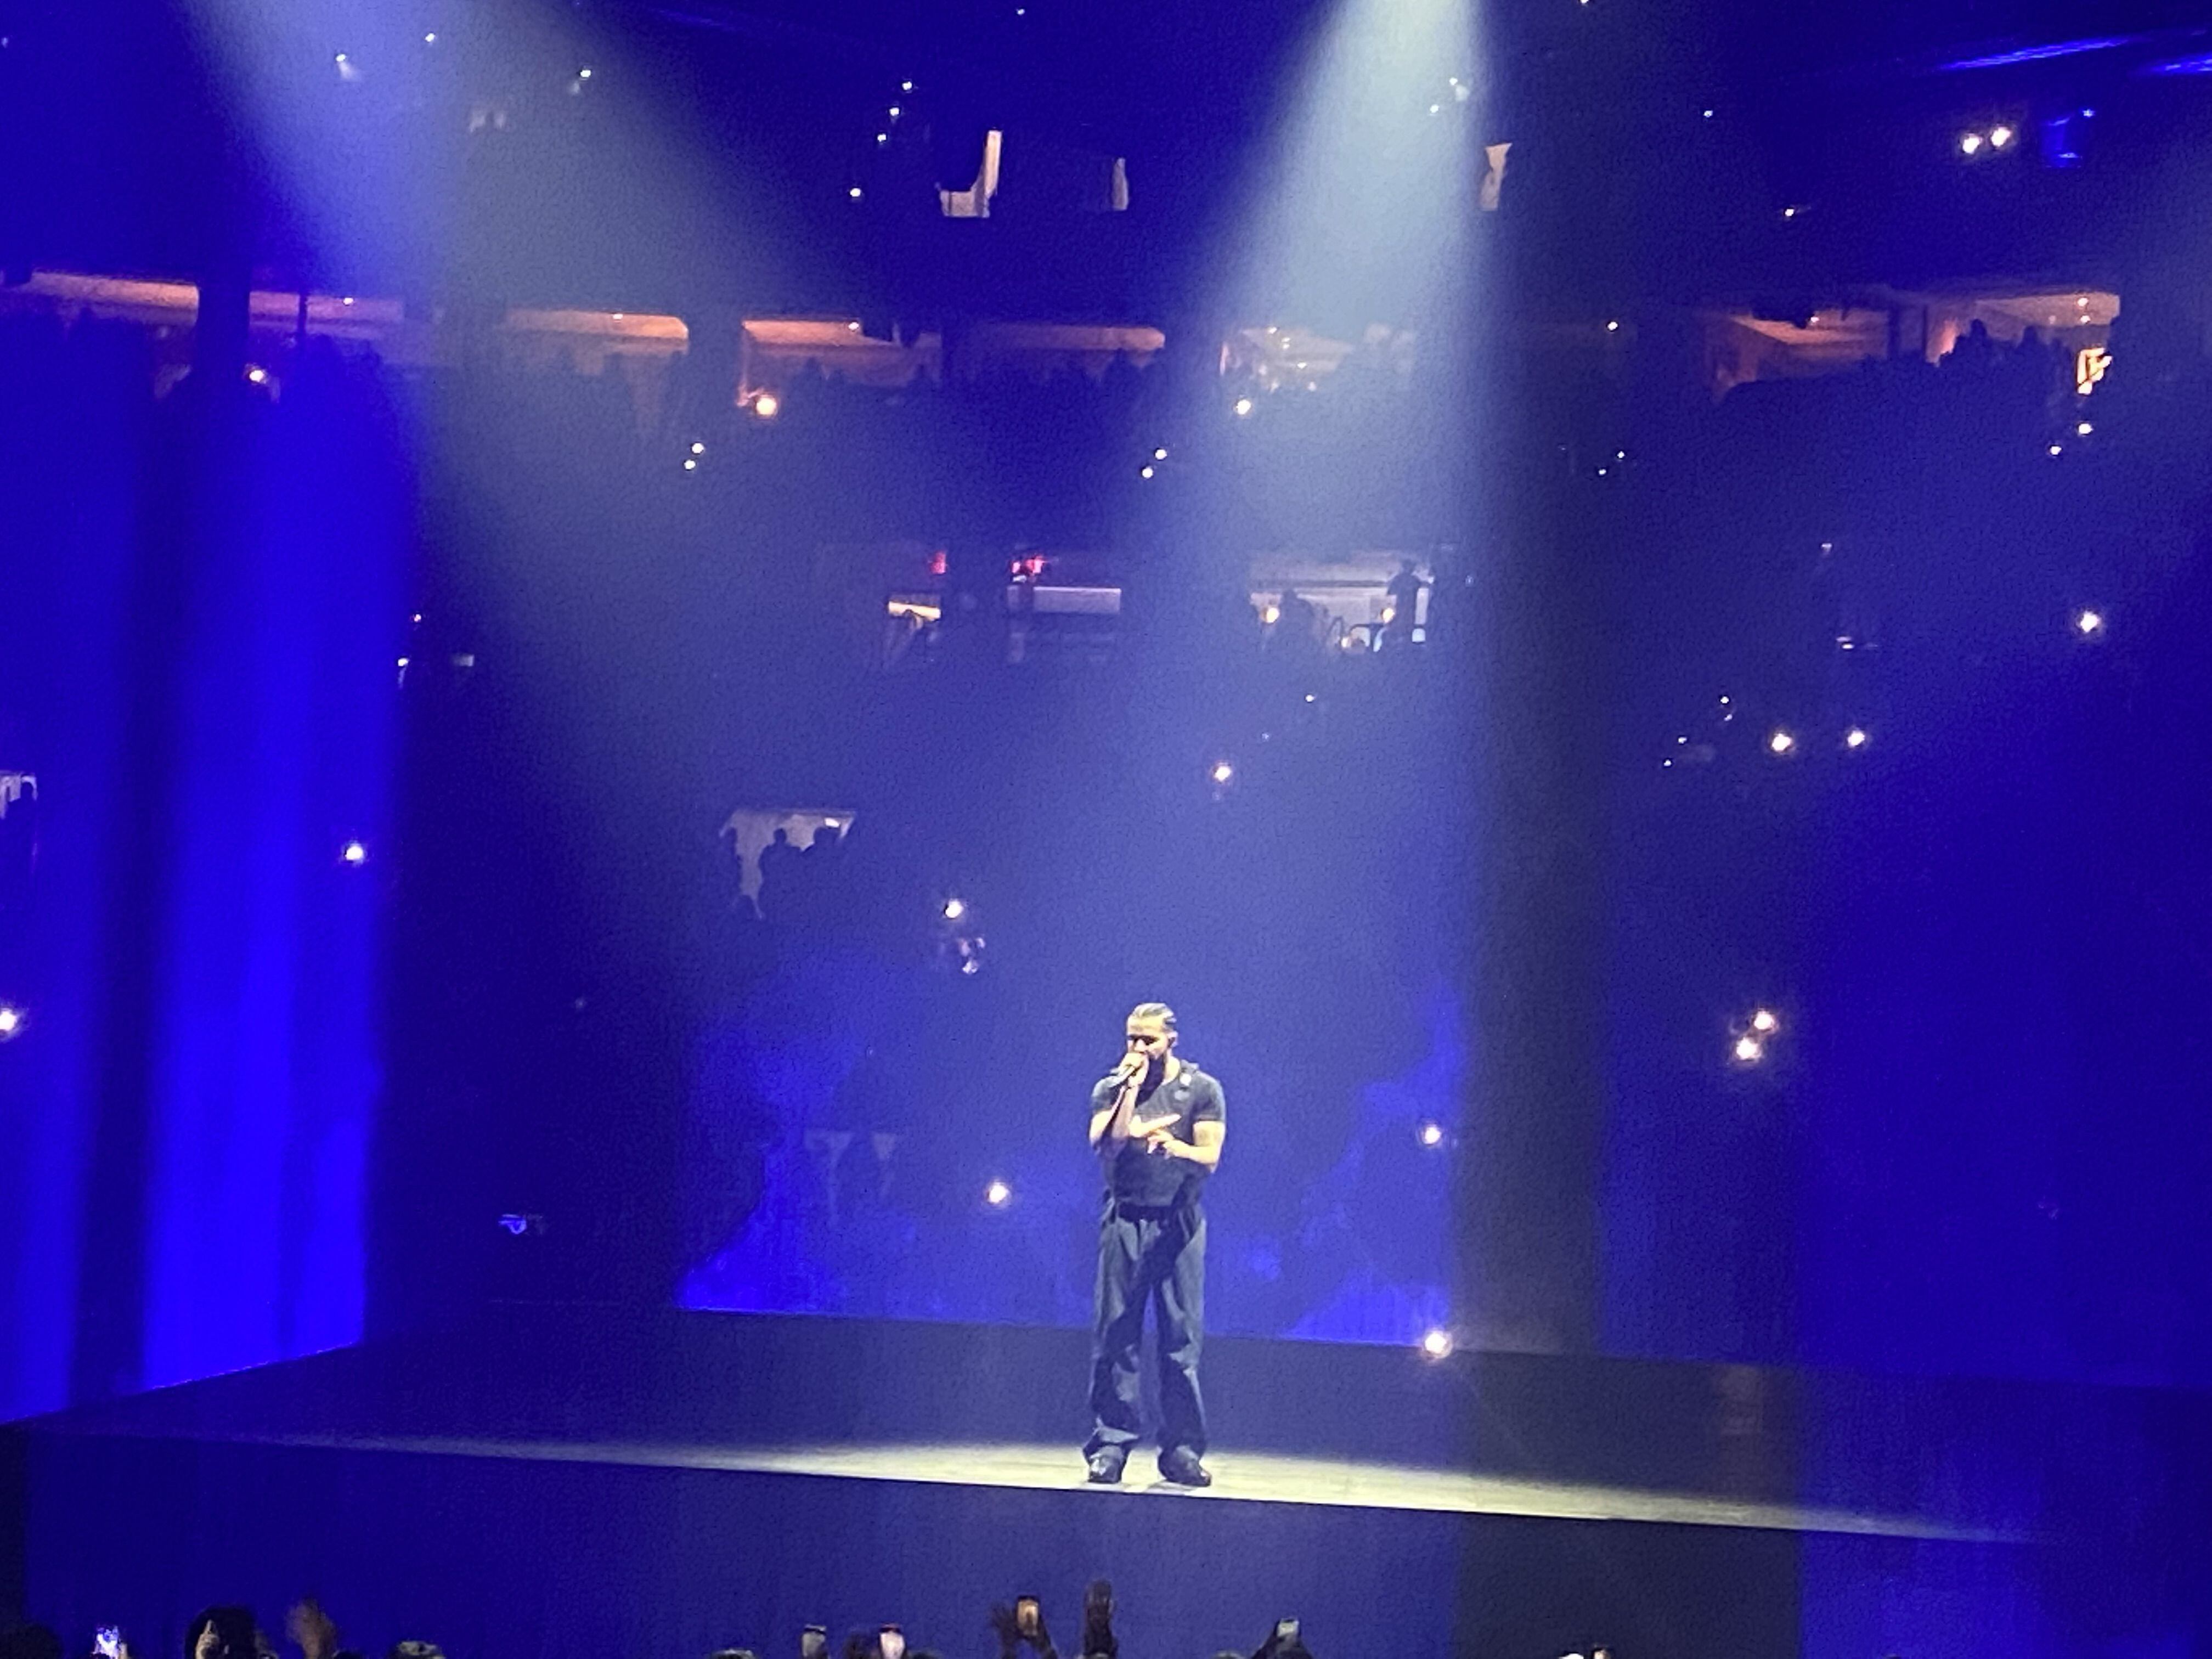 Drake due back at T-Mobile Arena in September